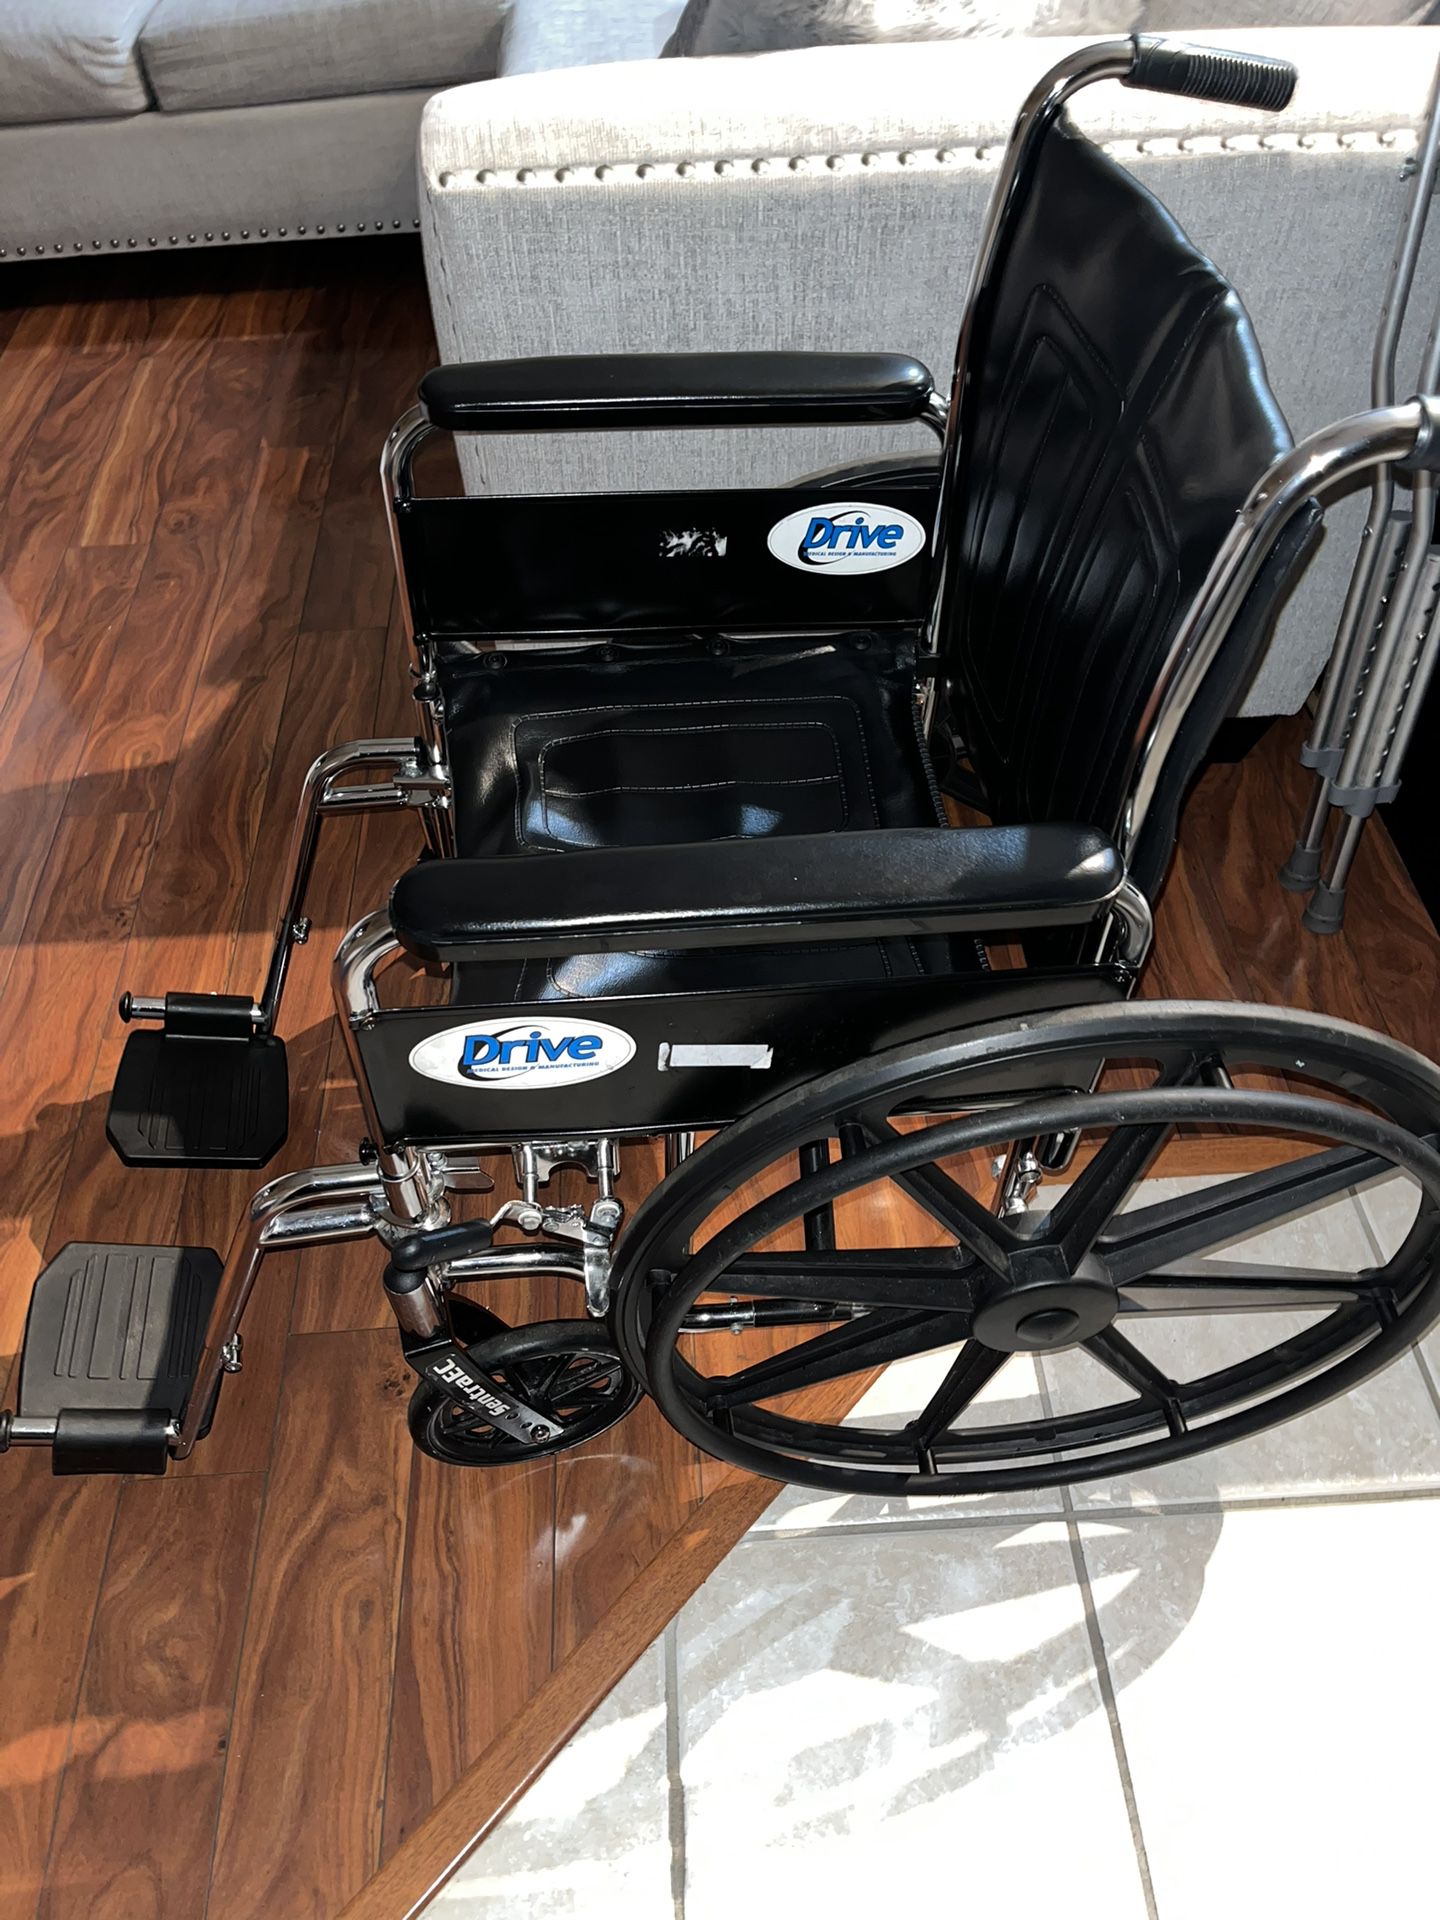 Nice Wheelchair Ready To Go!